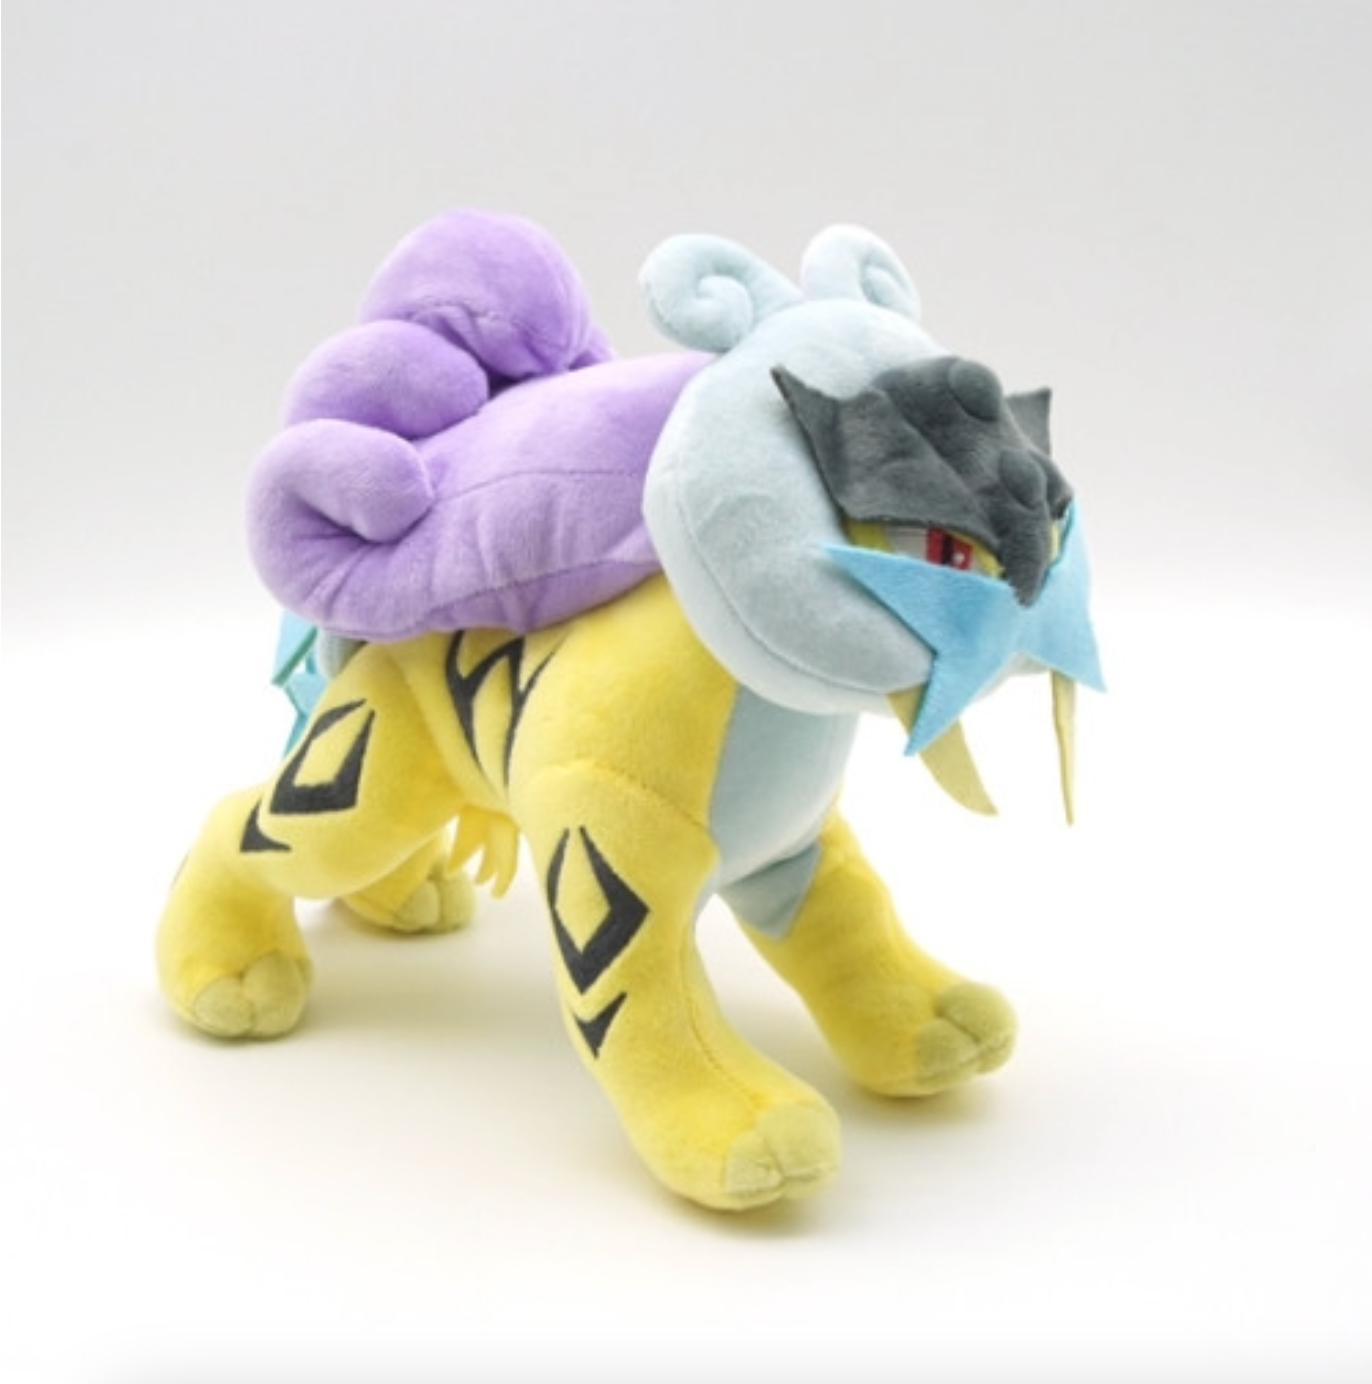 Pokemon Raikou 10" Soft Huggable Plush Stuffed Animal Fluffy Gift Cute Doll Toys